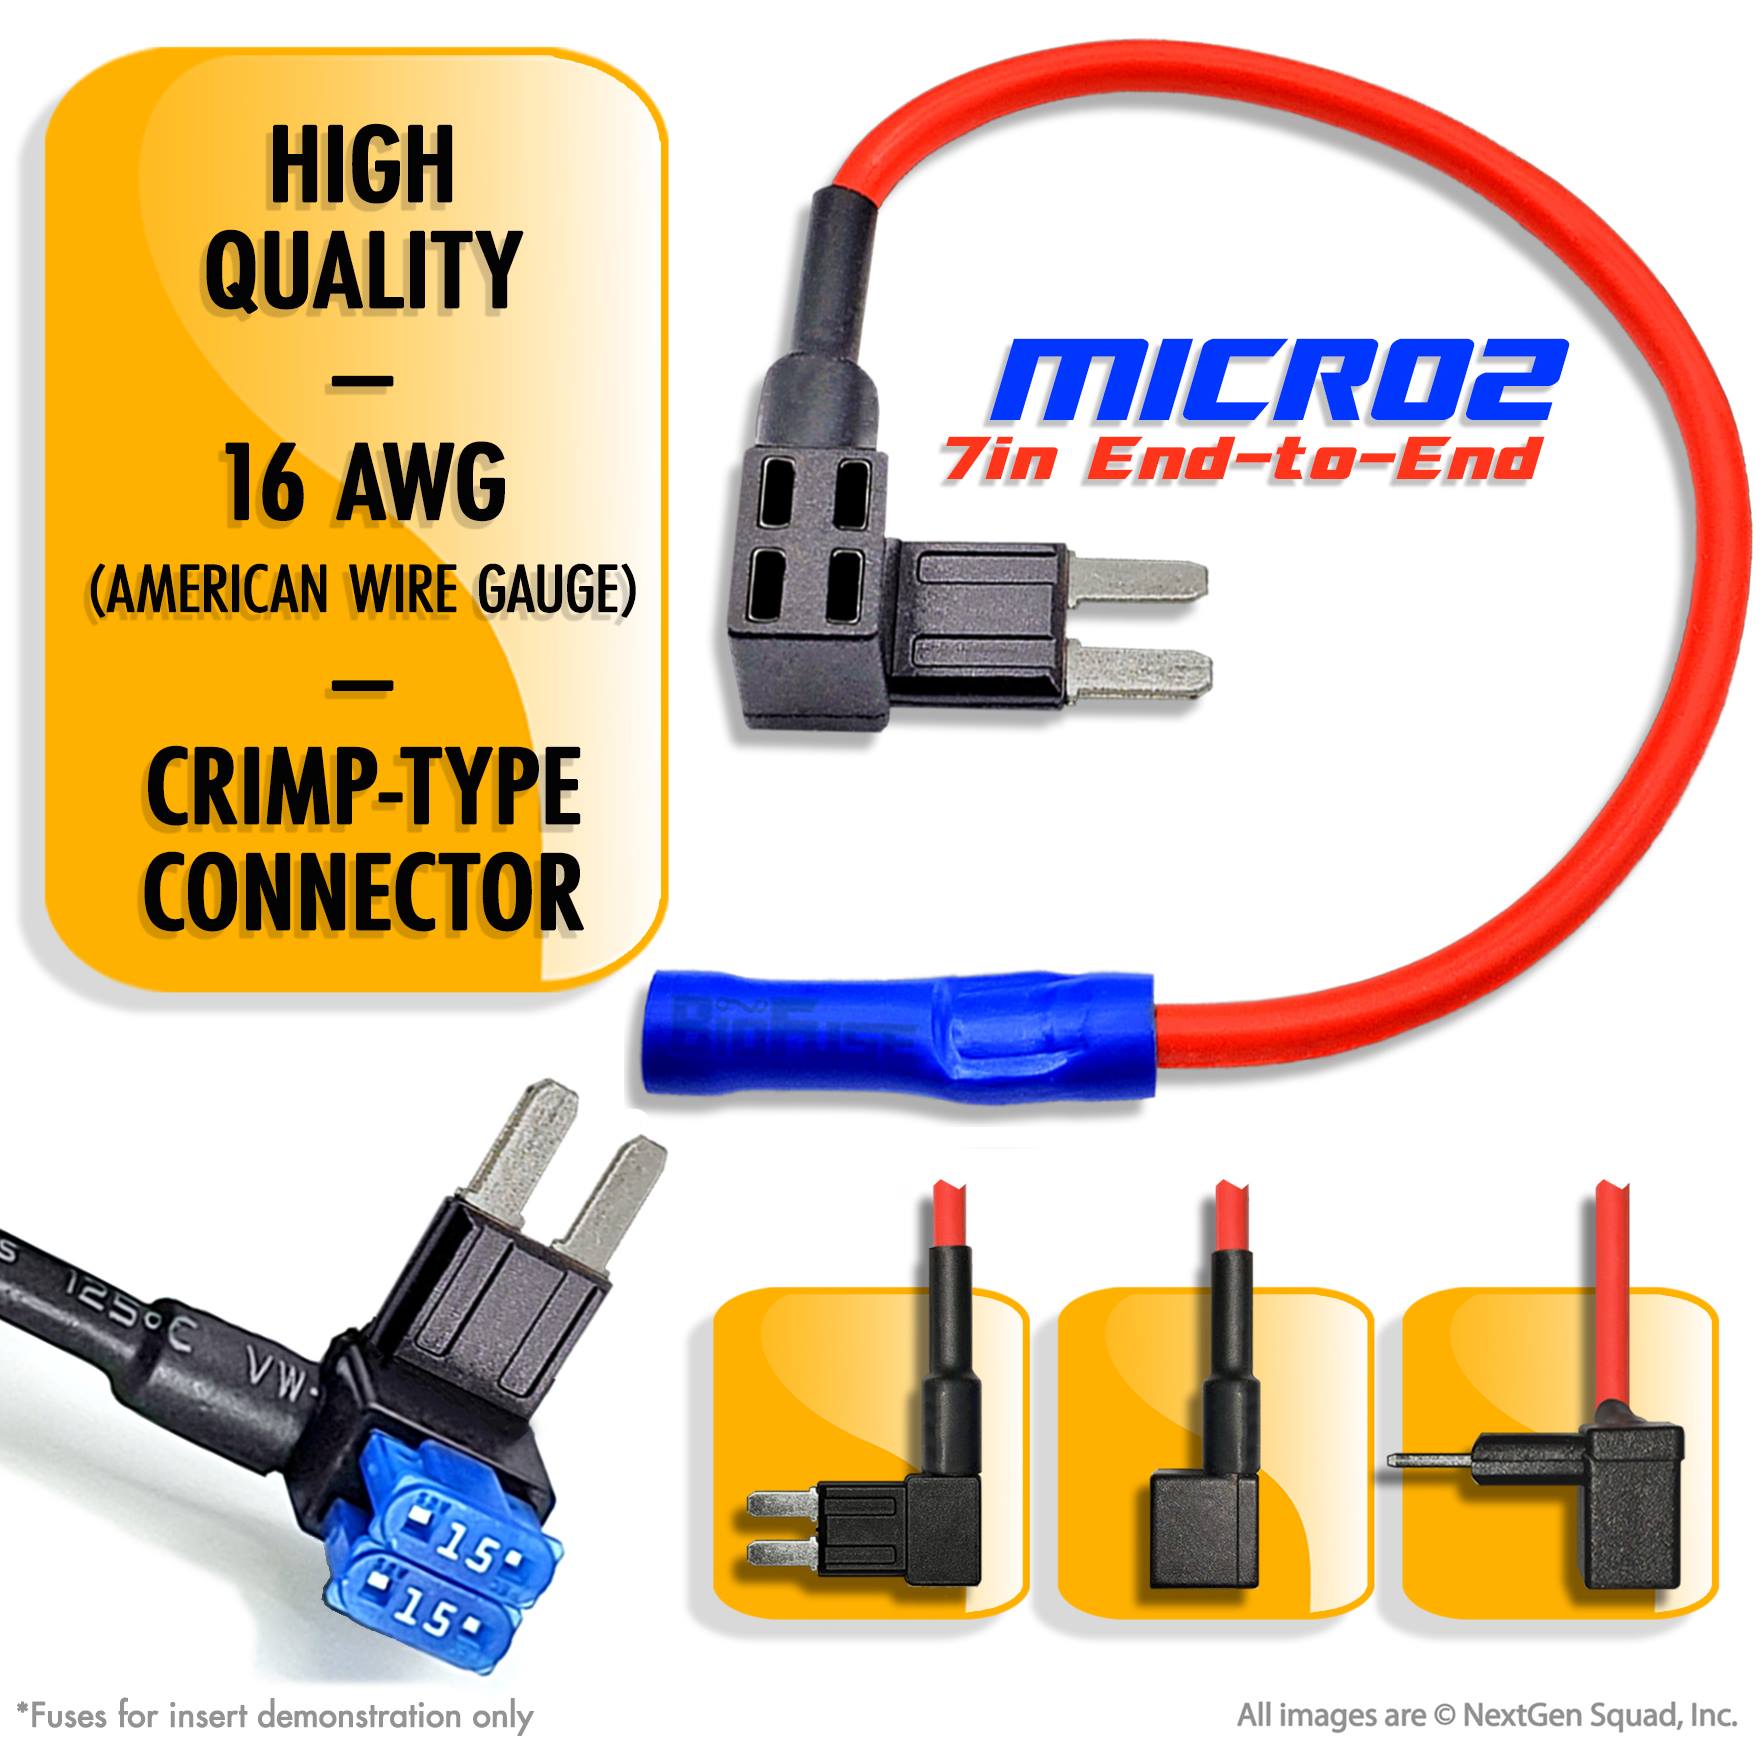 FTA-Micro2 Fuse Tap Adapter - Add-a-Circuit + Micro2 Fuse